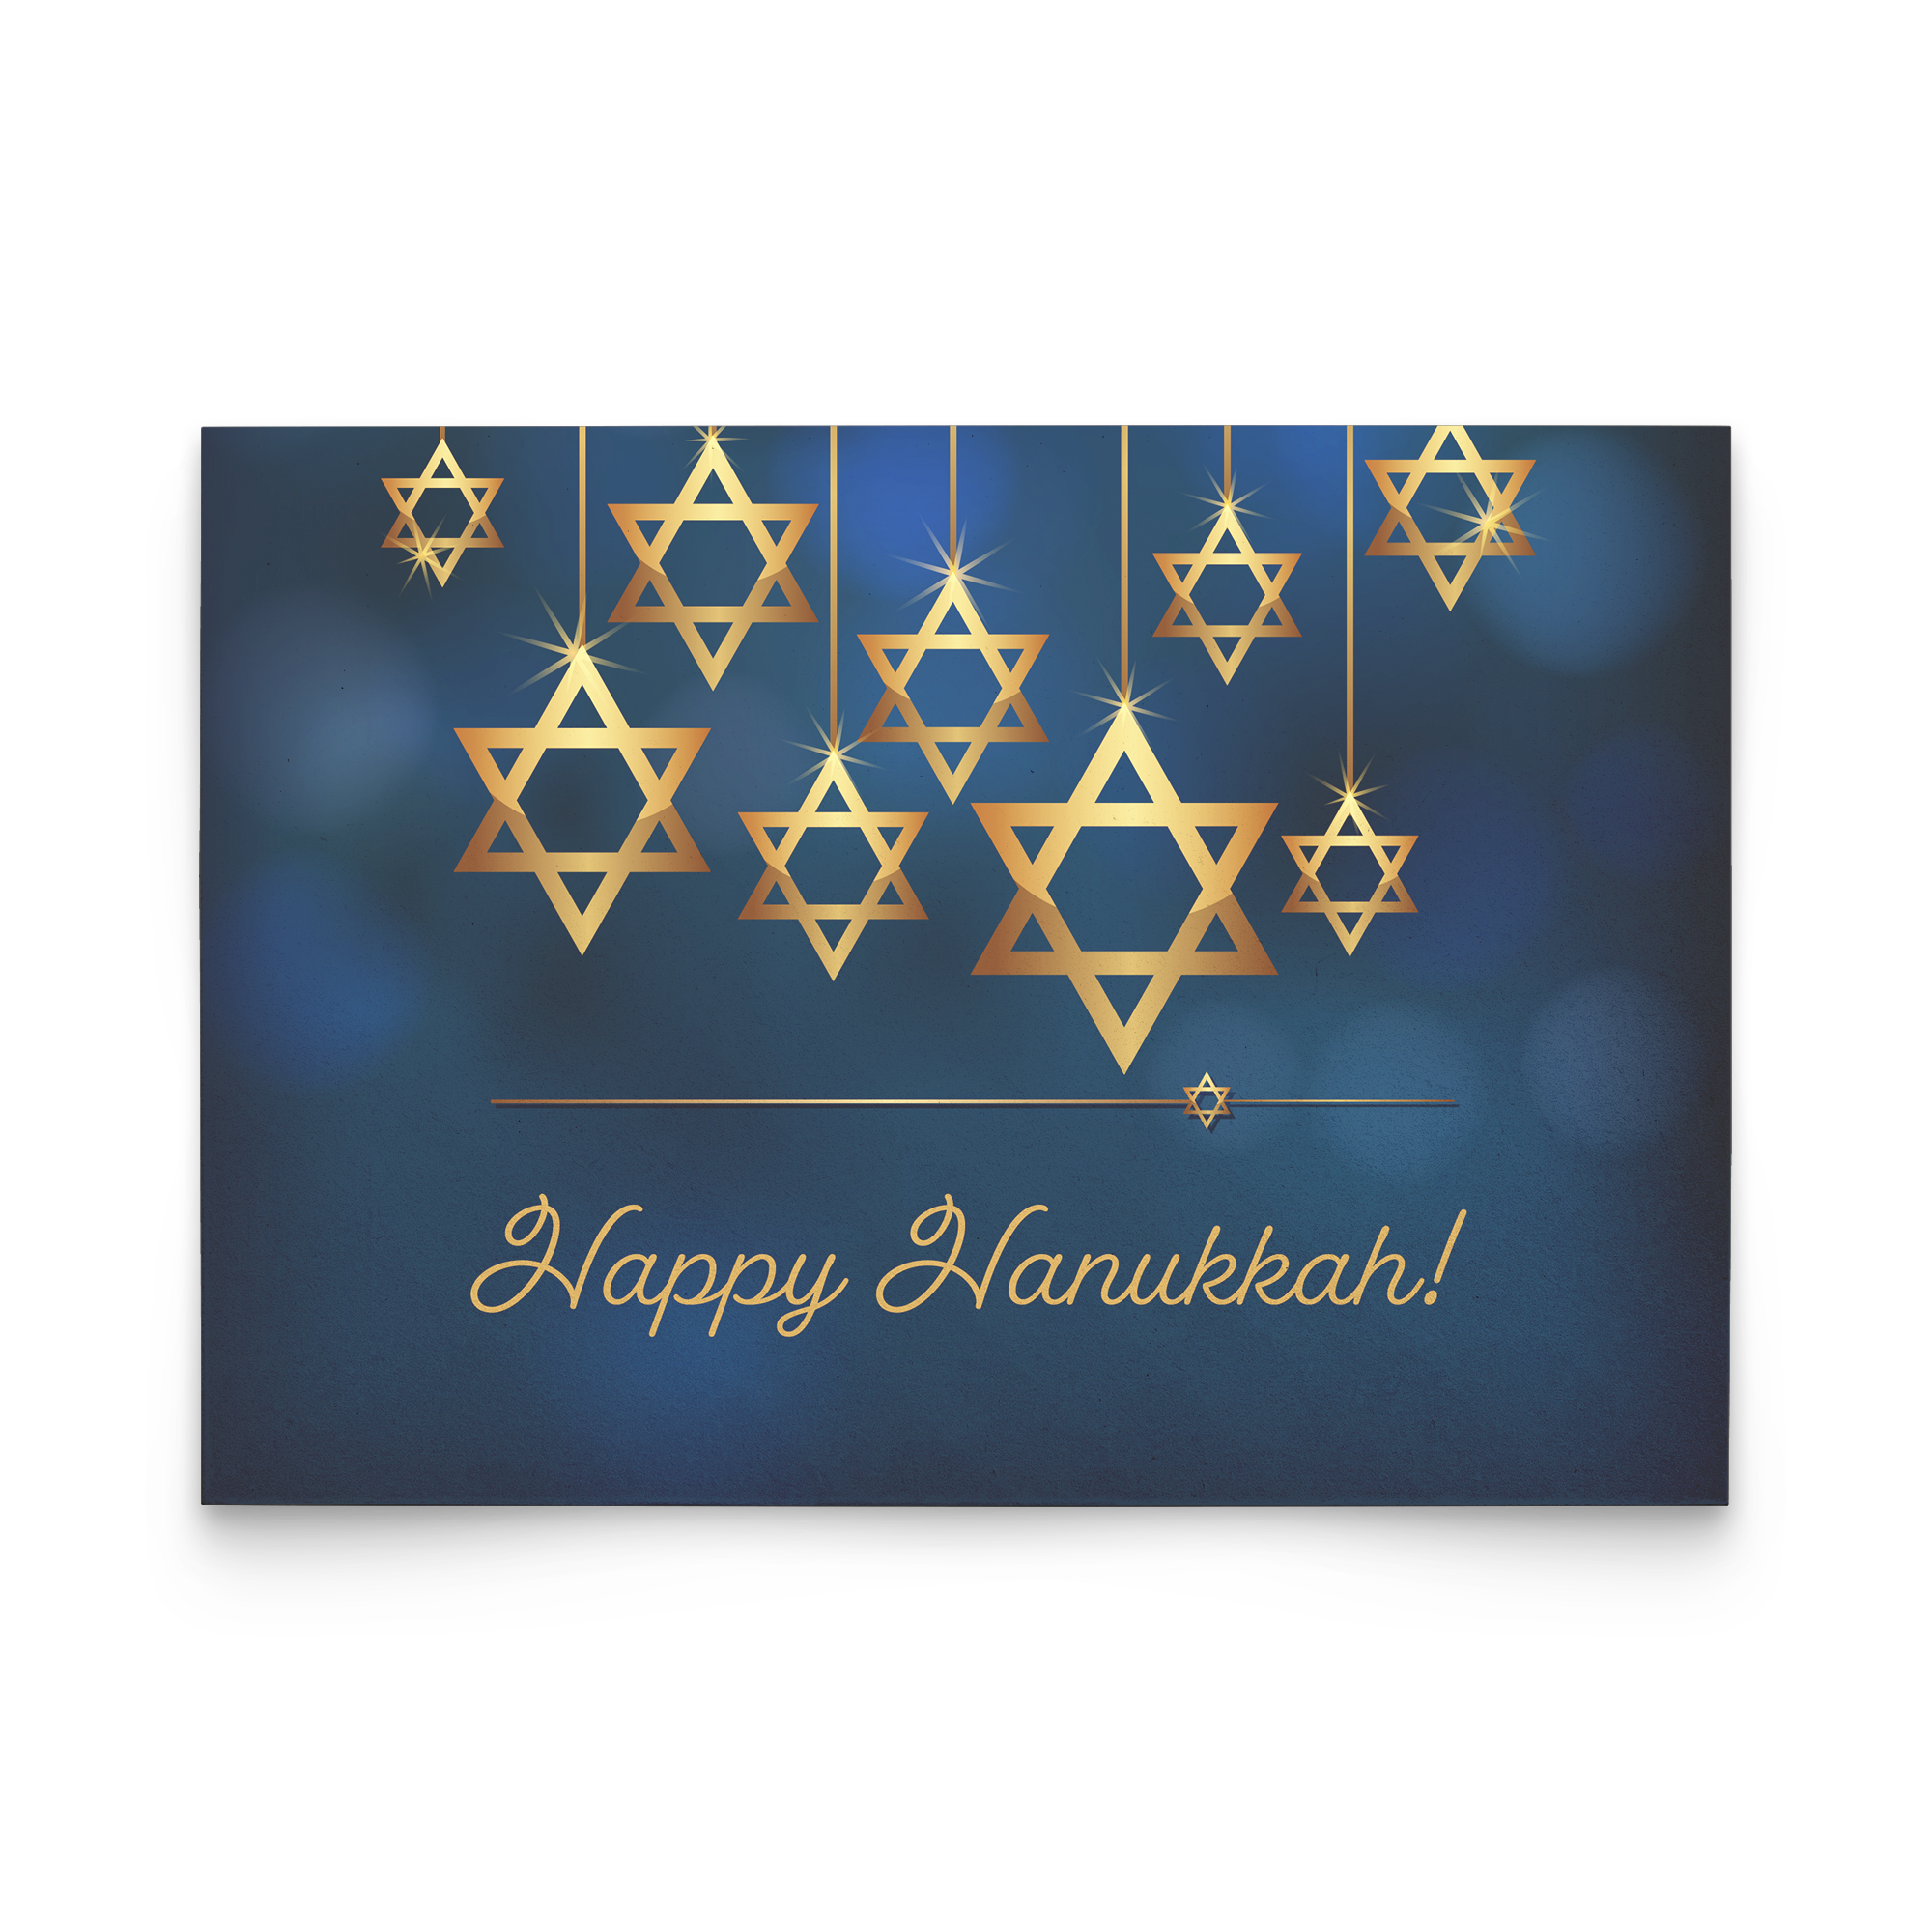 hanukkah greeting cards